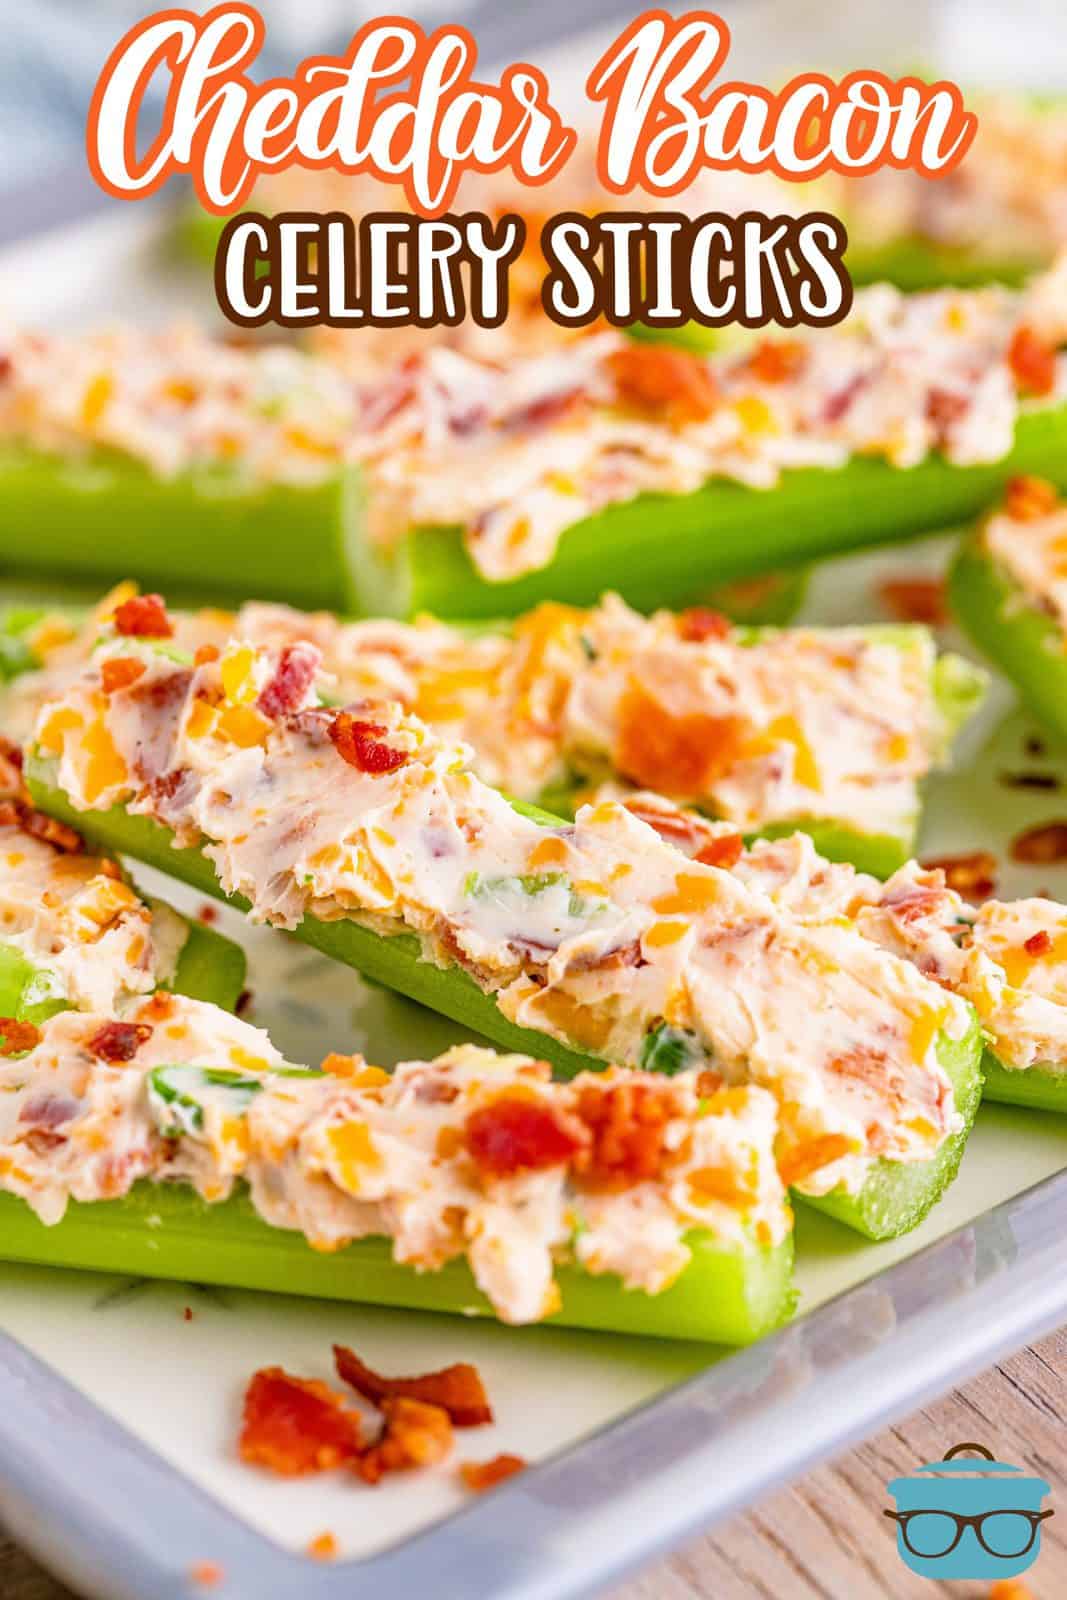 Cheddar Bacon Celery Sticks on platter slightly stacked Pinterest image.